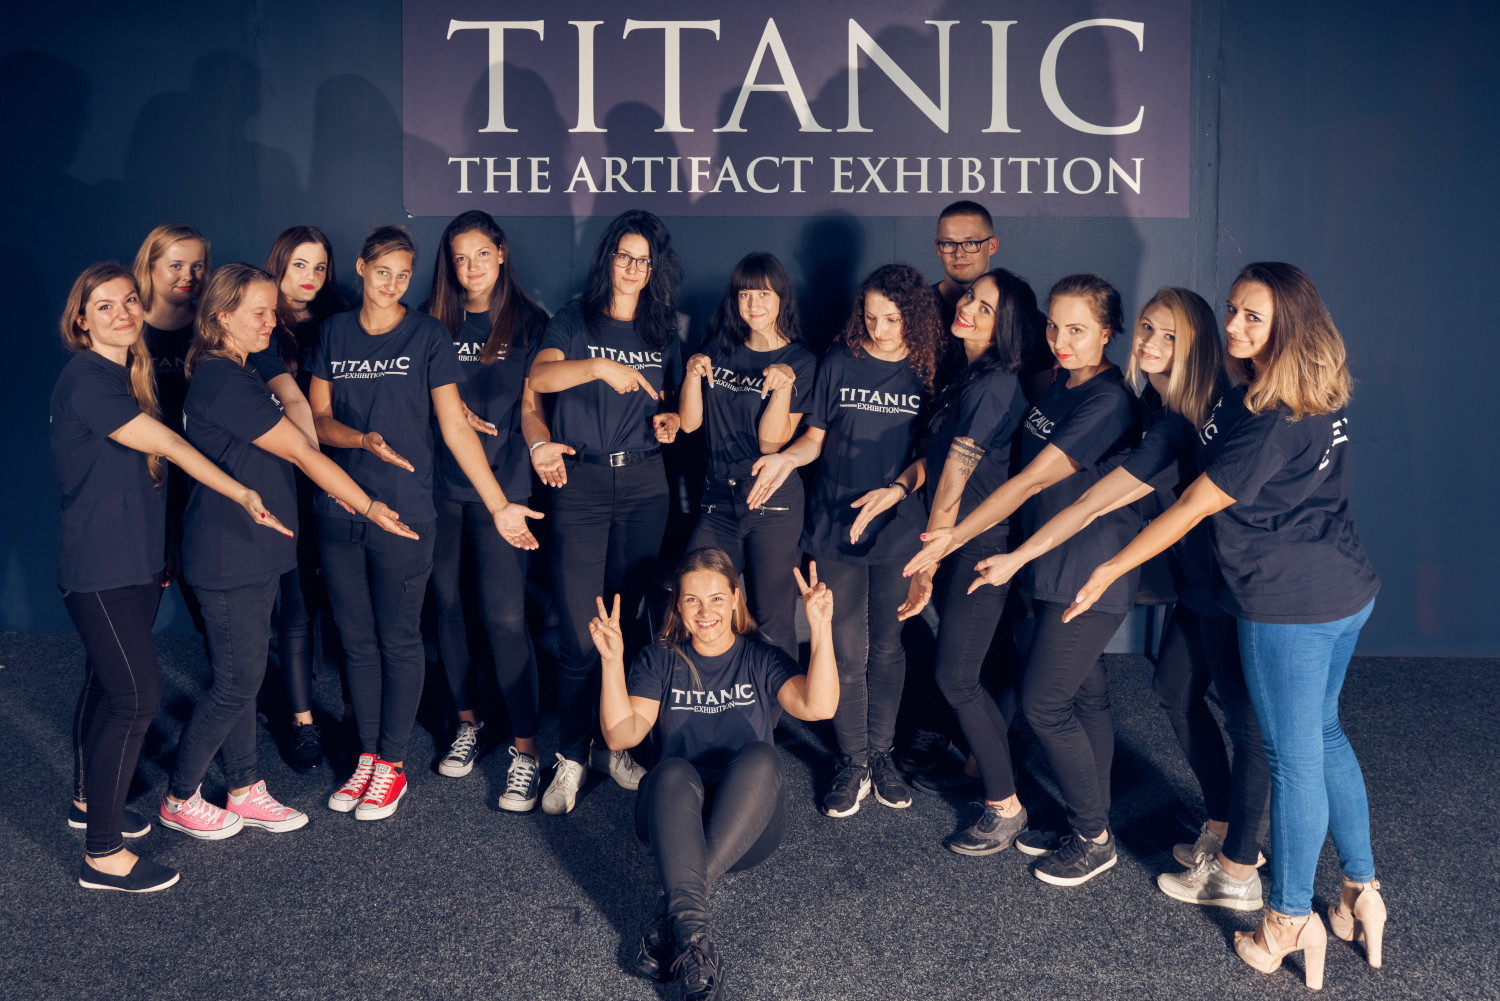 crew wystawa titanic the exhibition krakow hotel forum 2